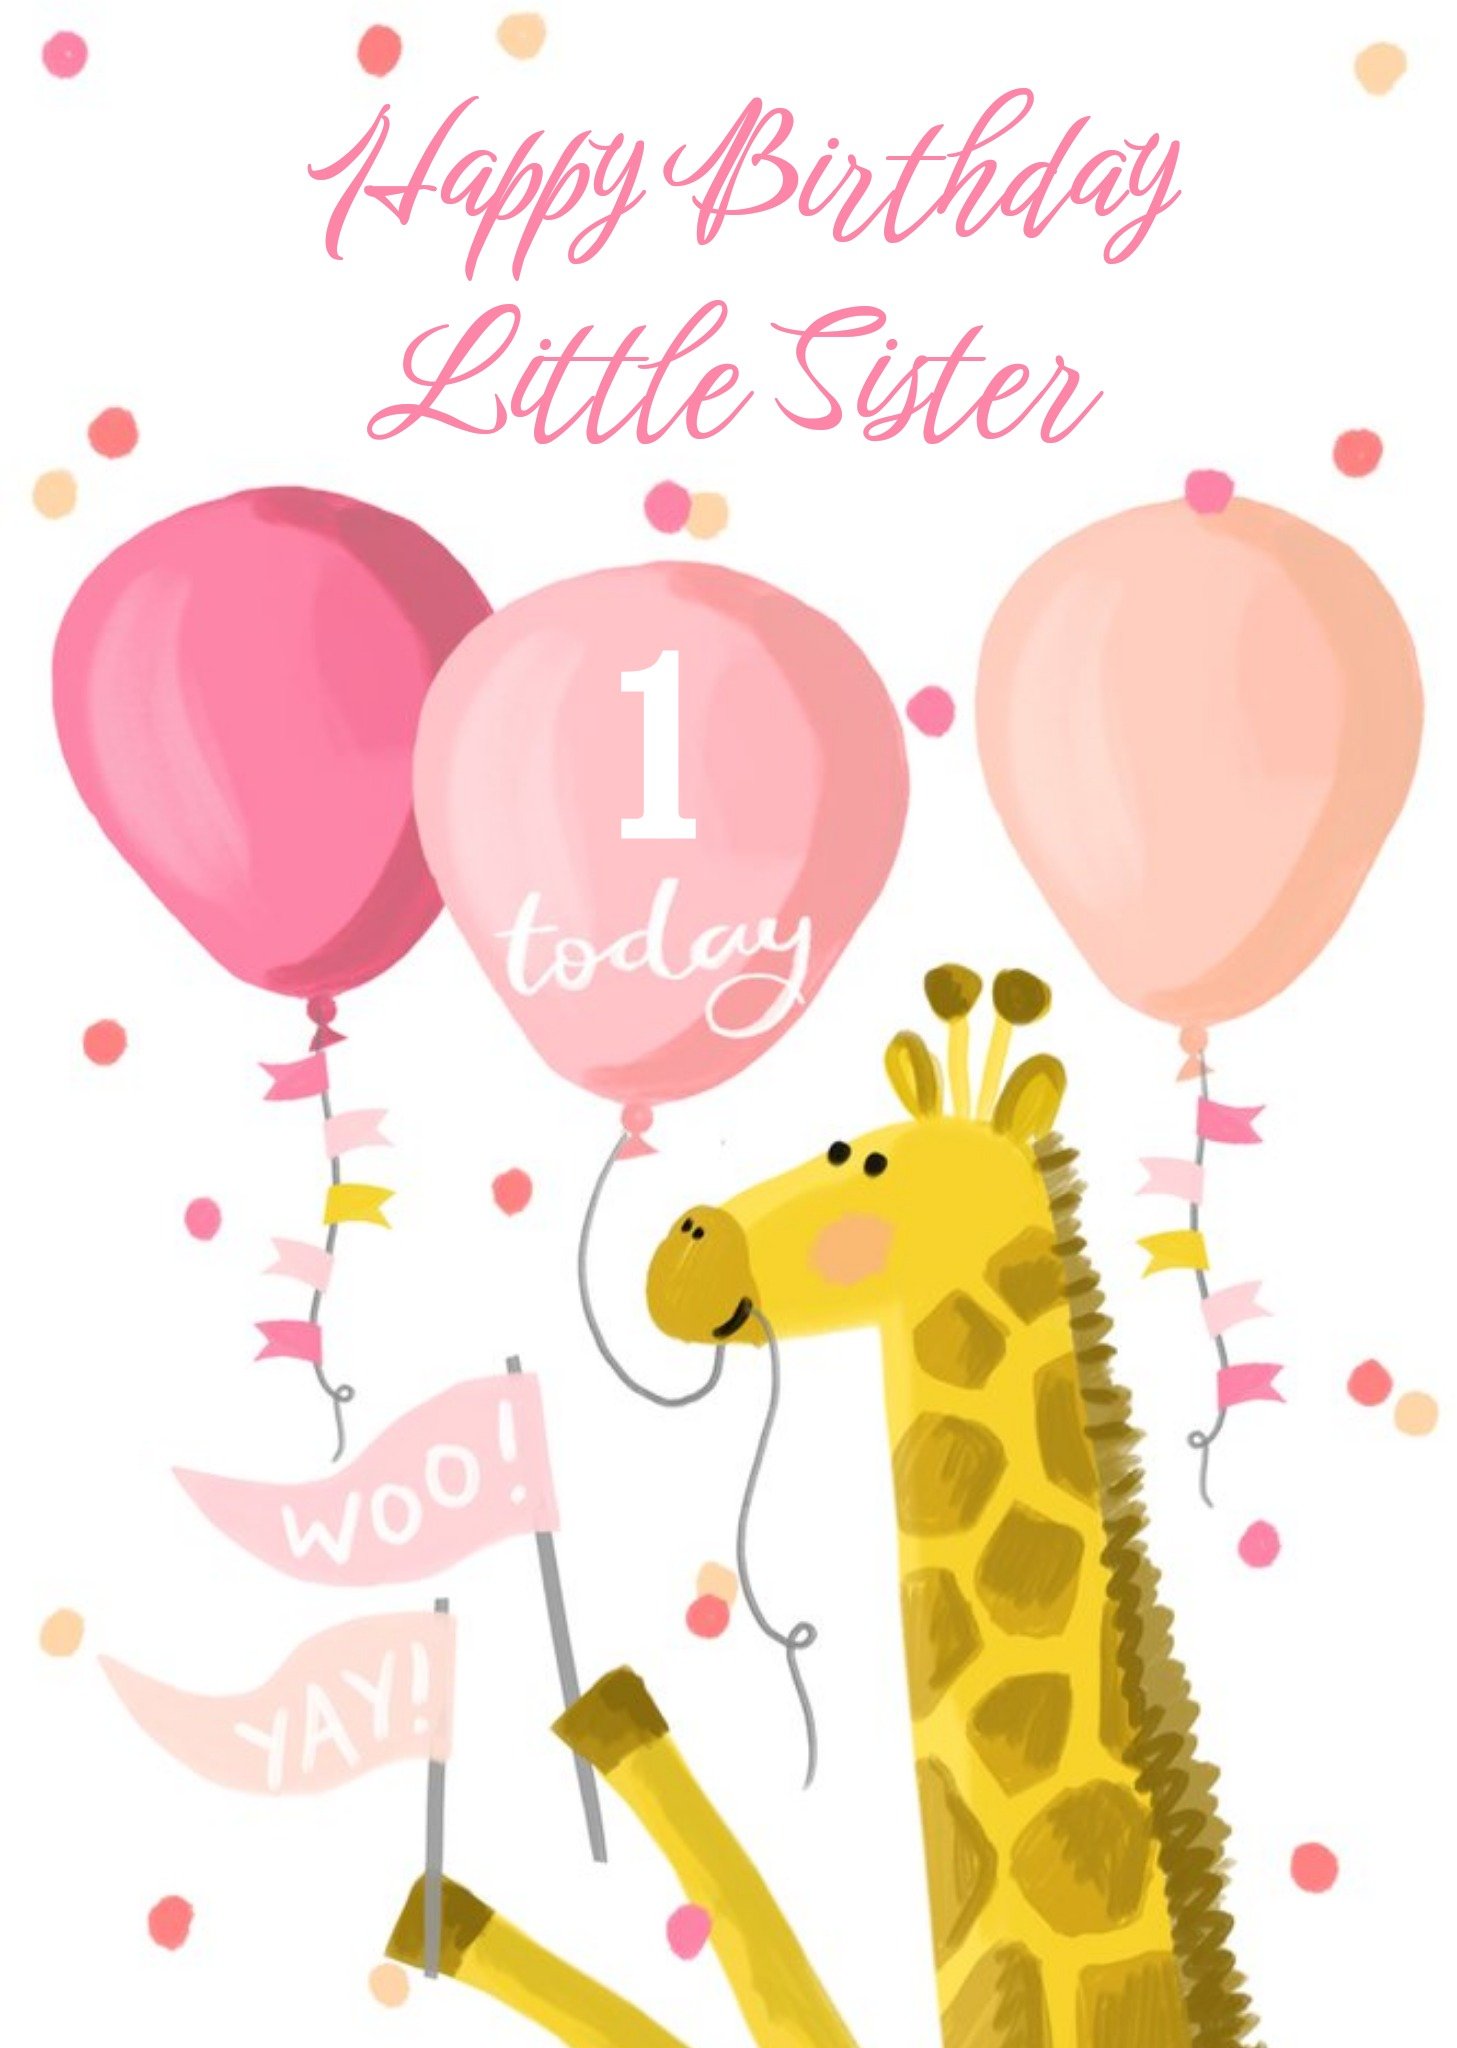 Okey Dokey Design Okey Dokey Illustrated Giraffe And Balloons Sister 1 Today Birthday Card Ecard